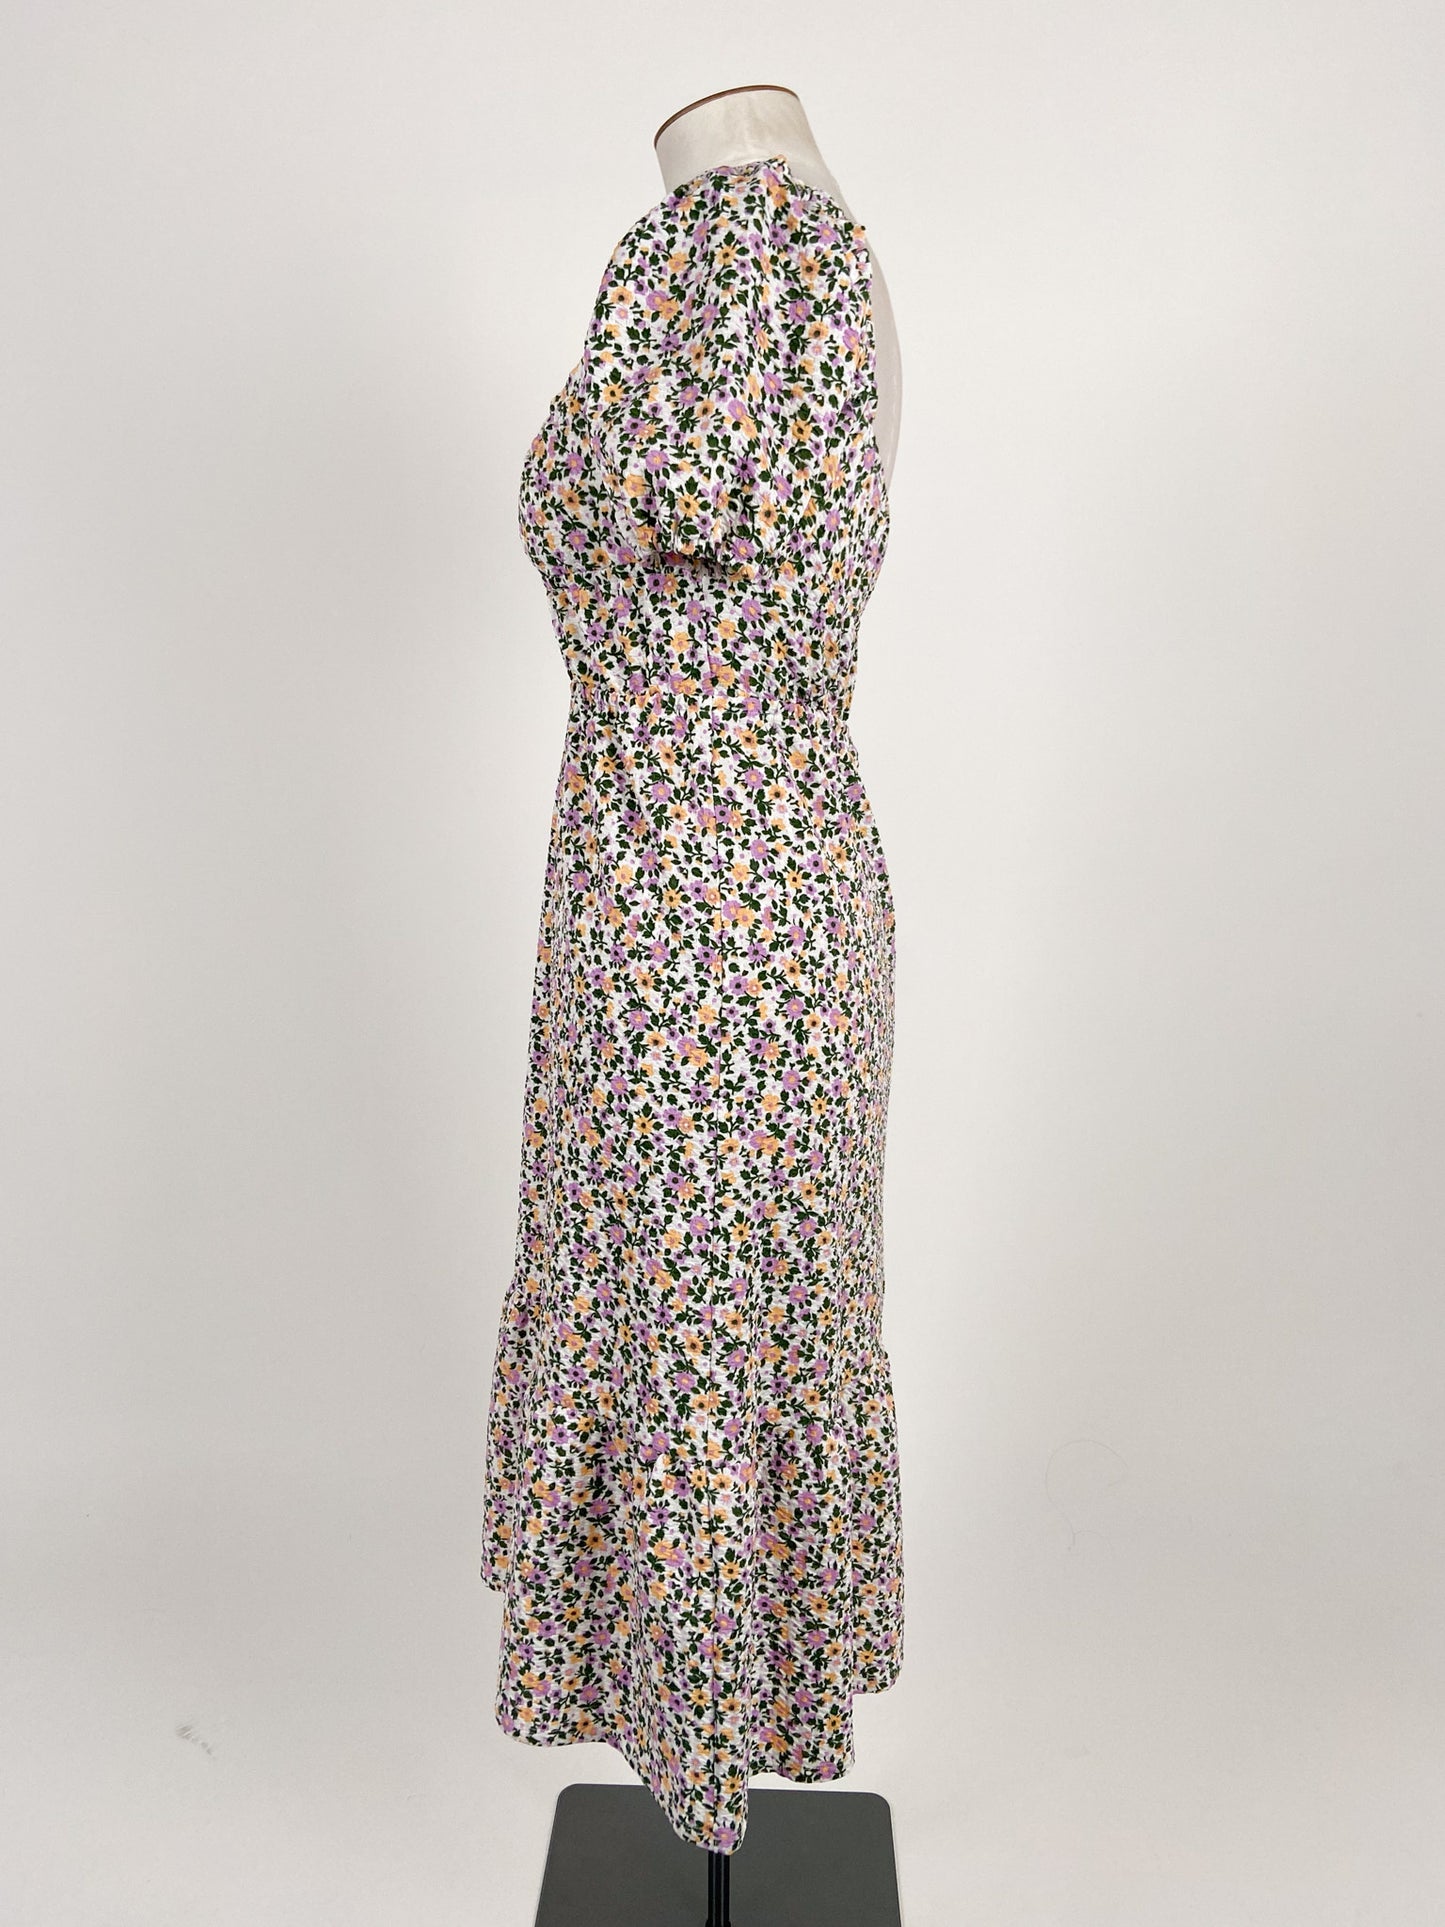 ASOS | Multicoloured Casual Dress | Size 8